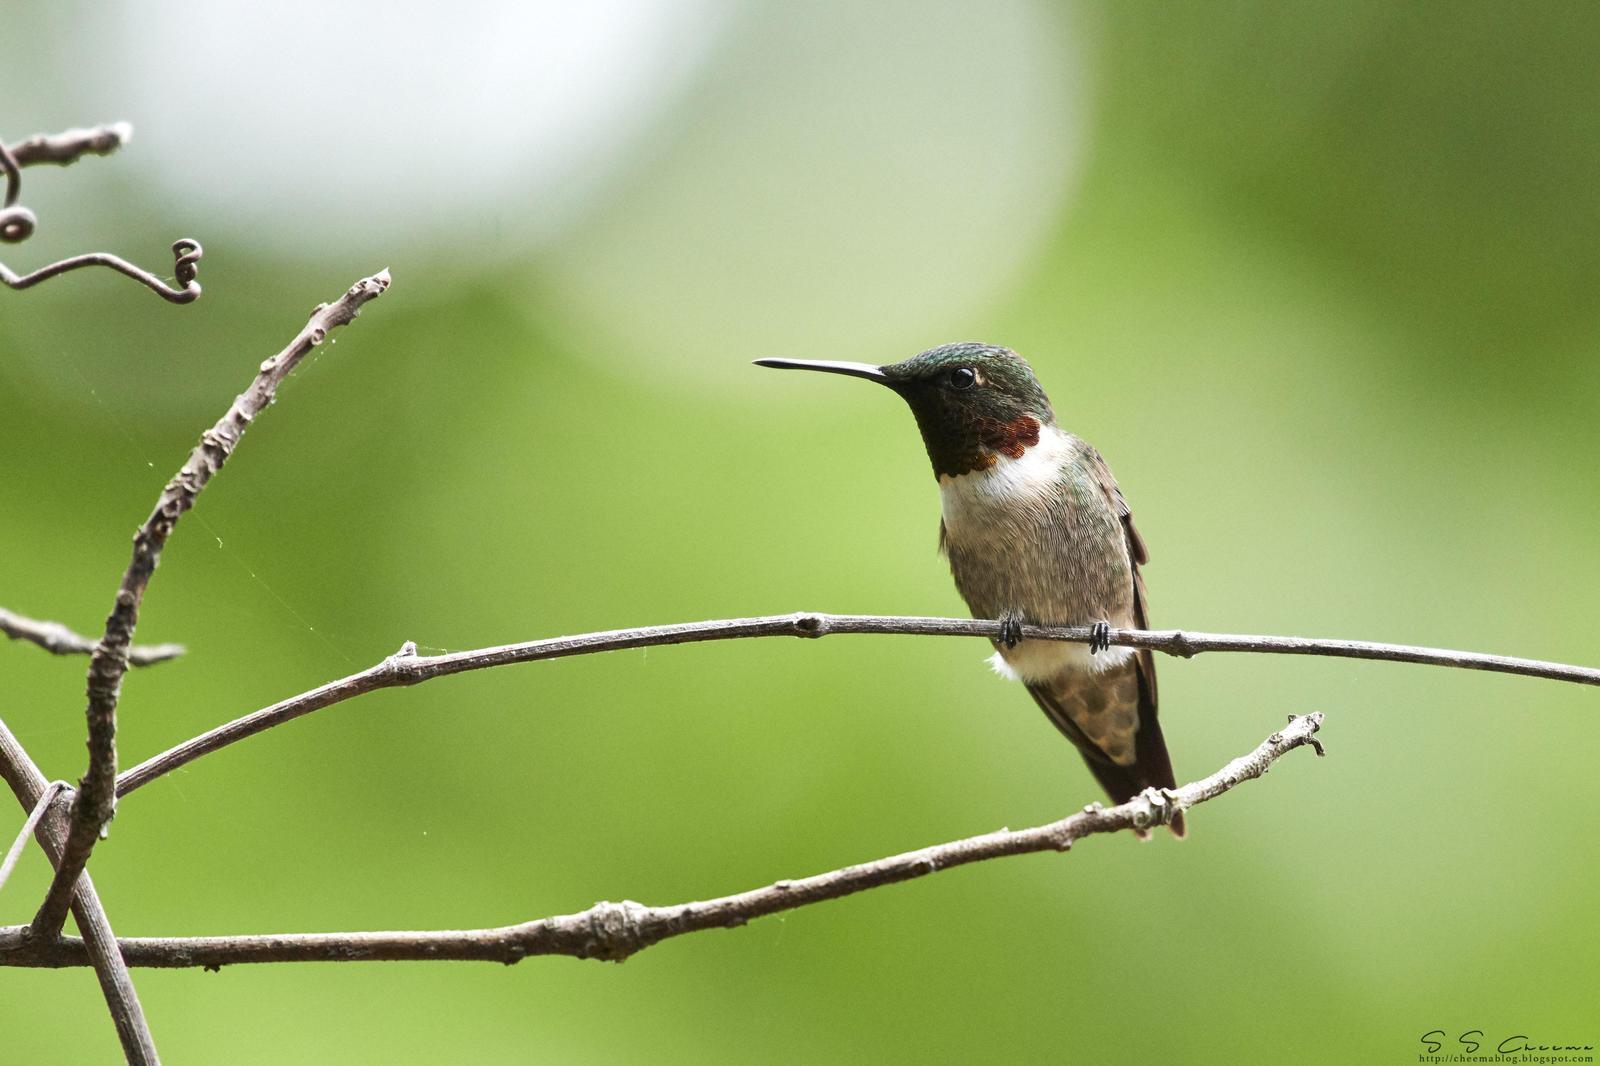 Ruby-throated Hummingbird Photo by Simepreet Cheema